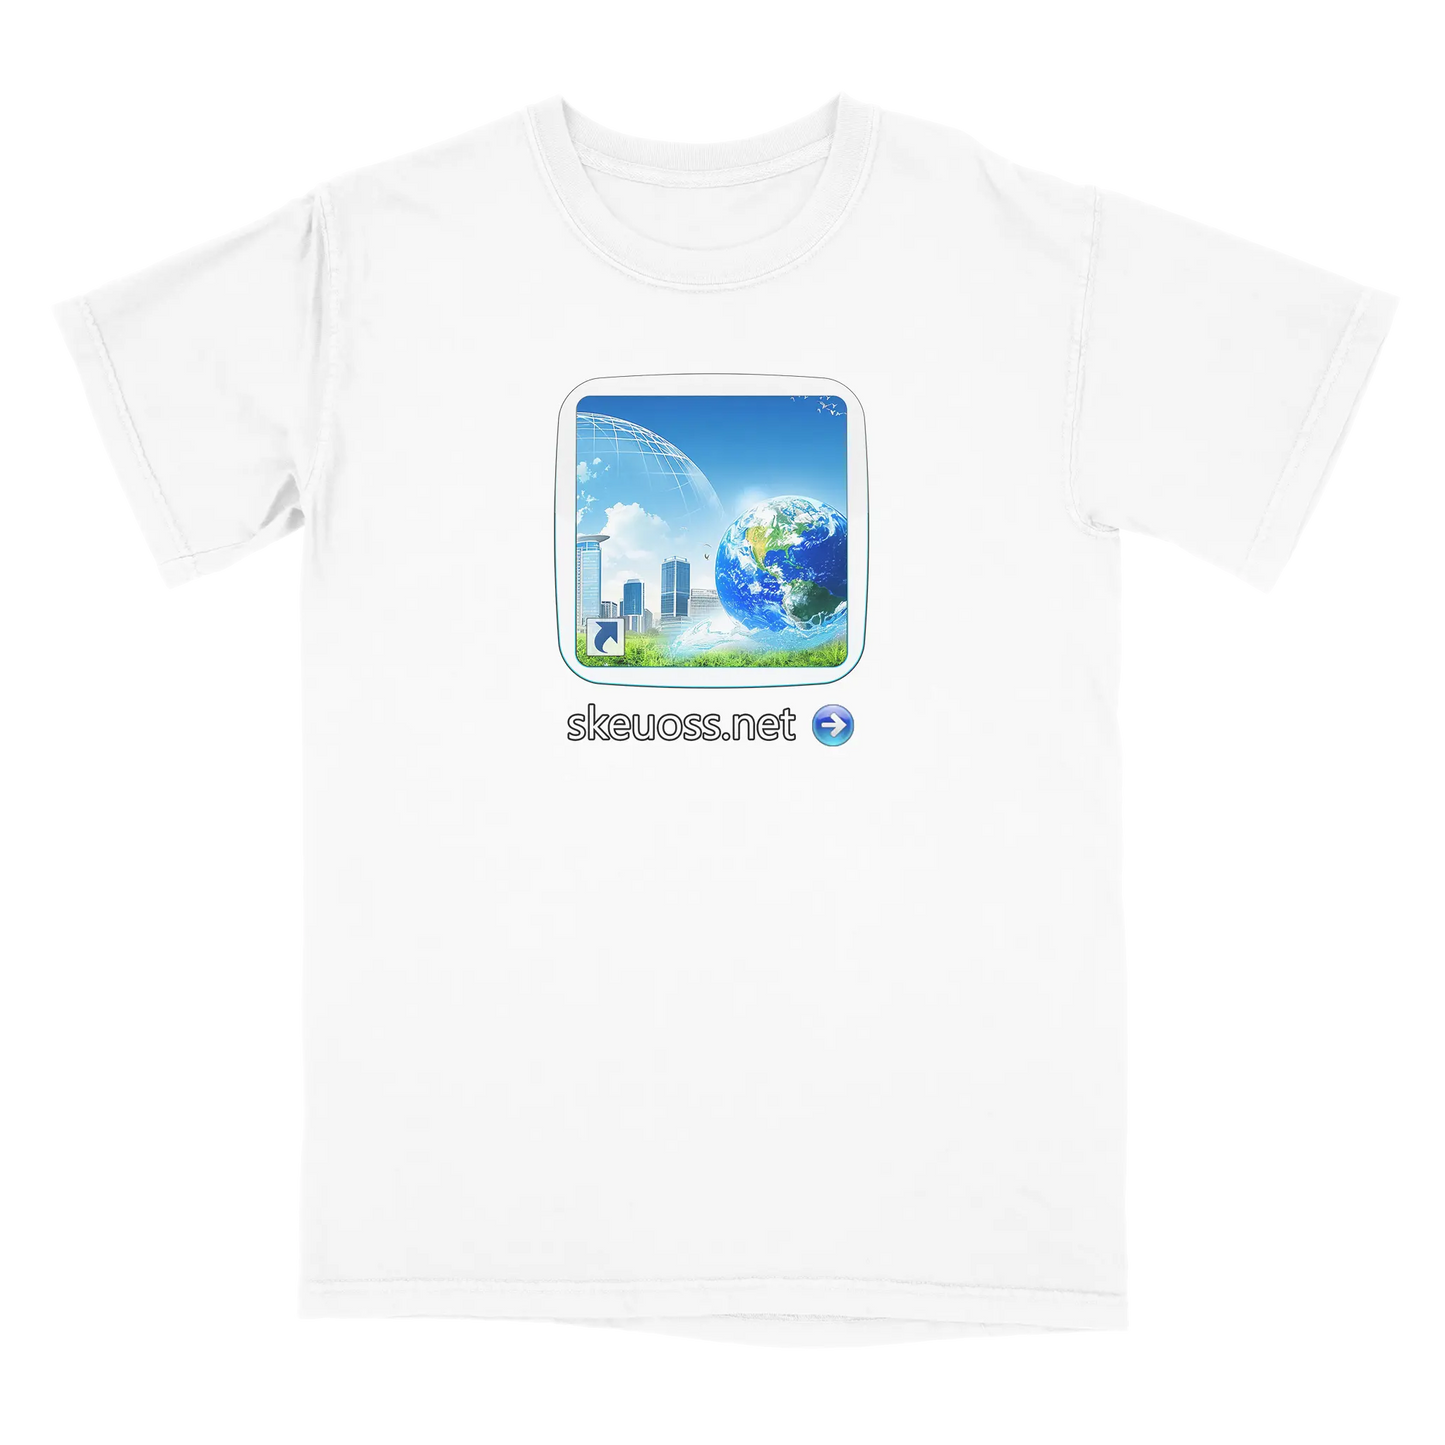 Frutiger Aero T-shirt - User Login Collection - User 373